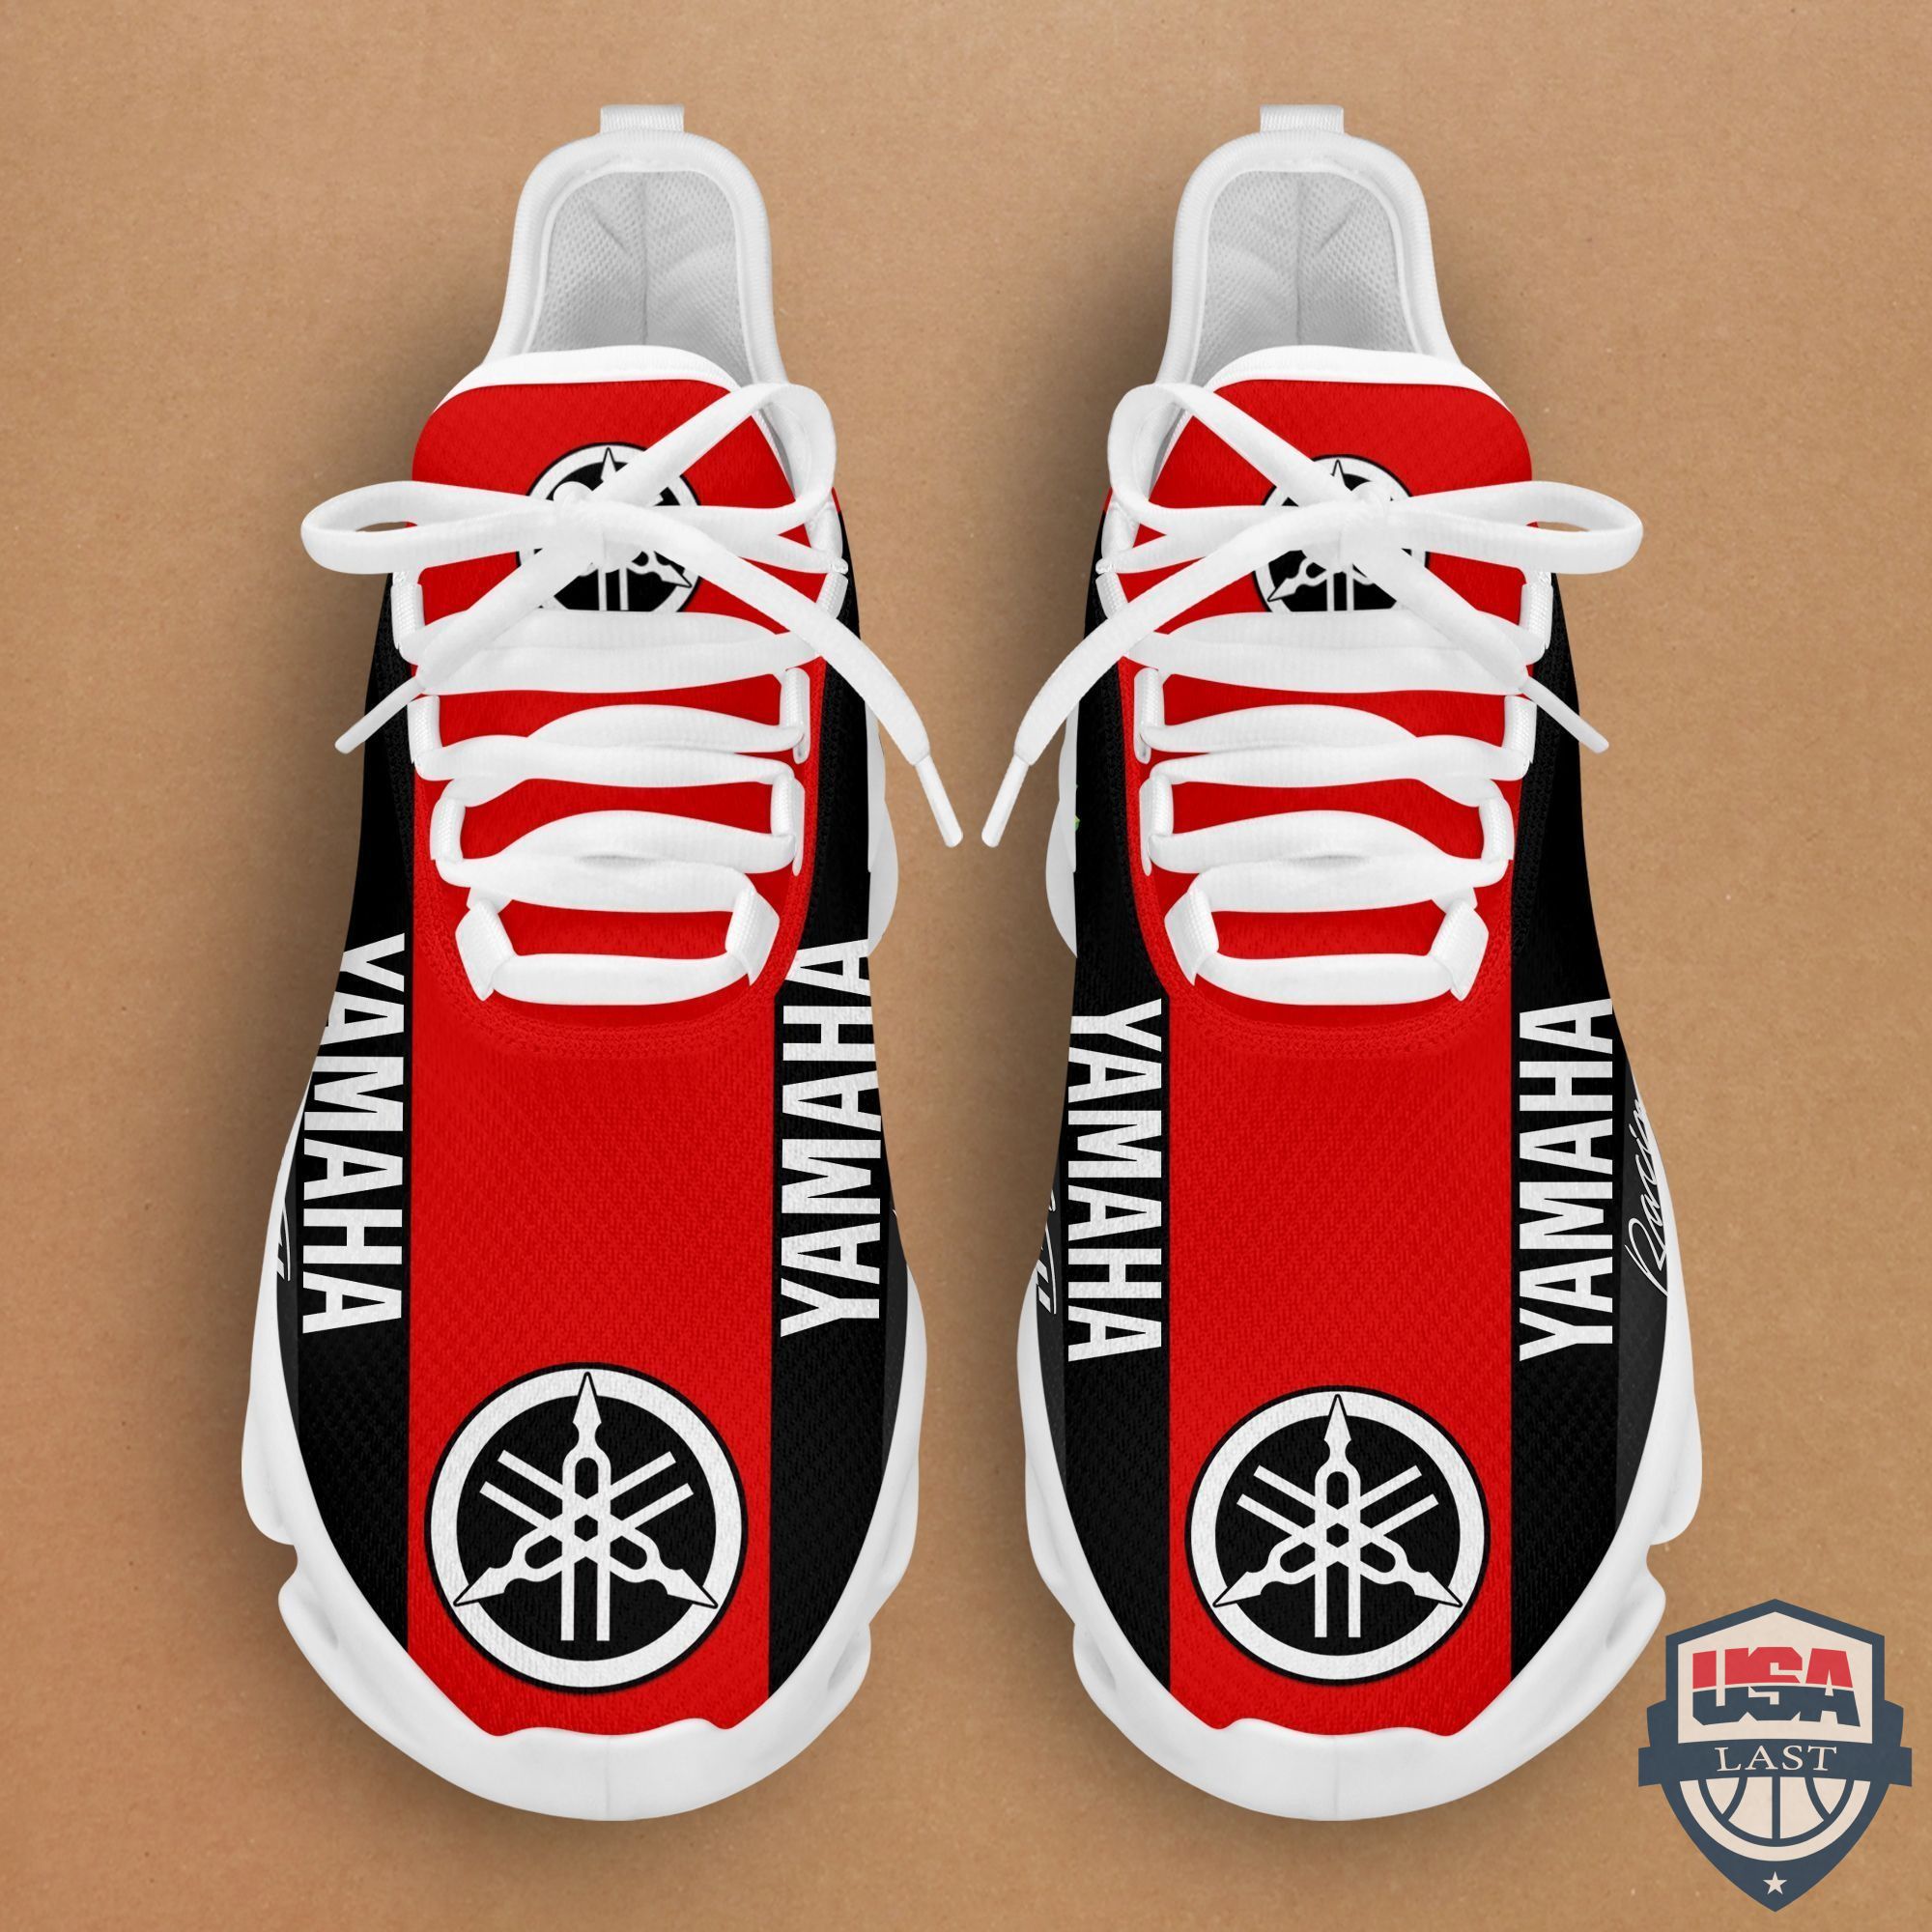 Top Trending – Yamaha Racing Chunky Sneaker Red Version